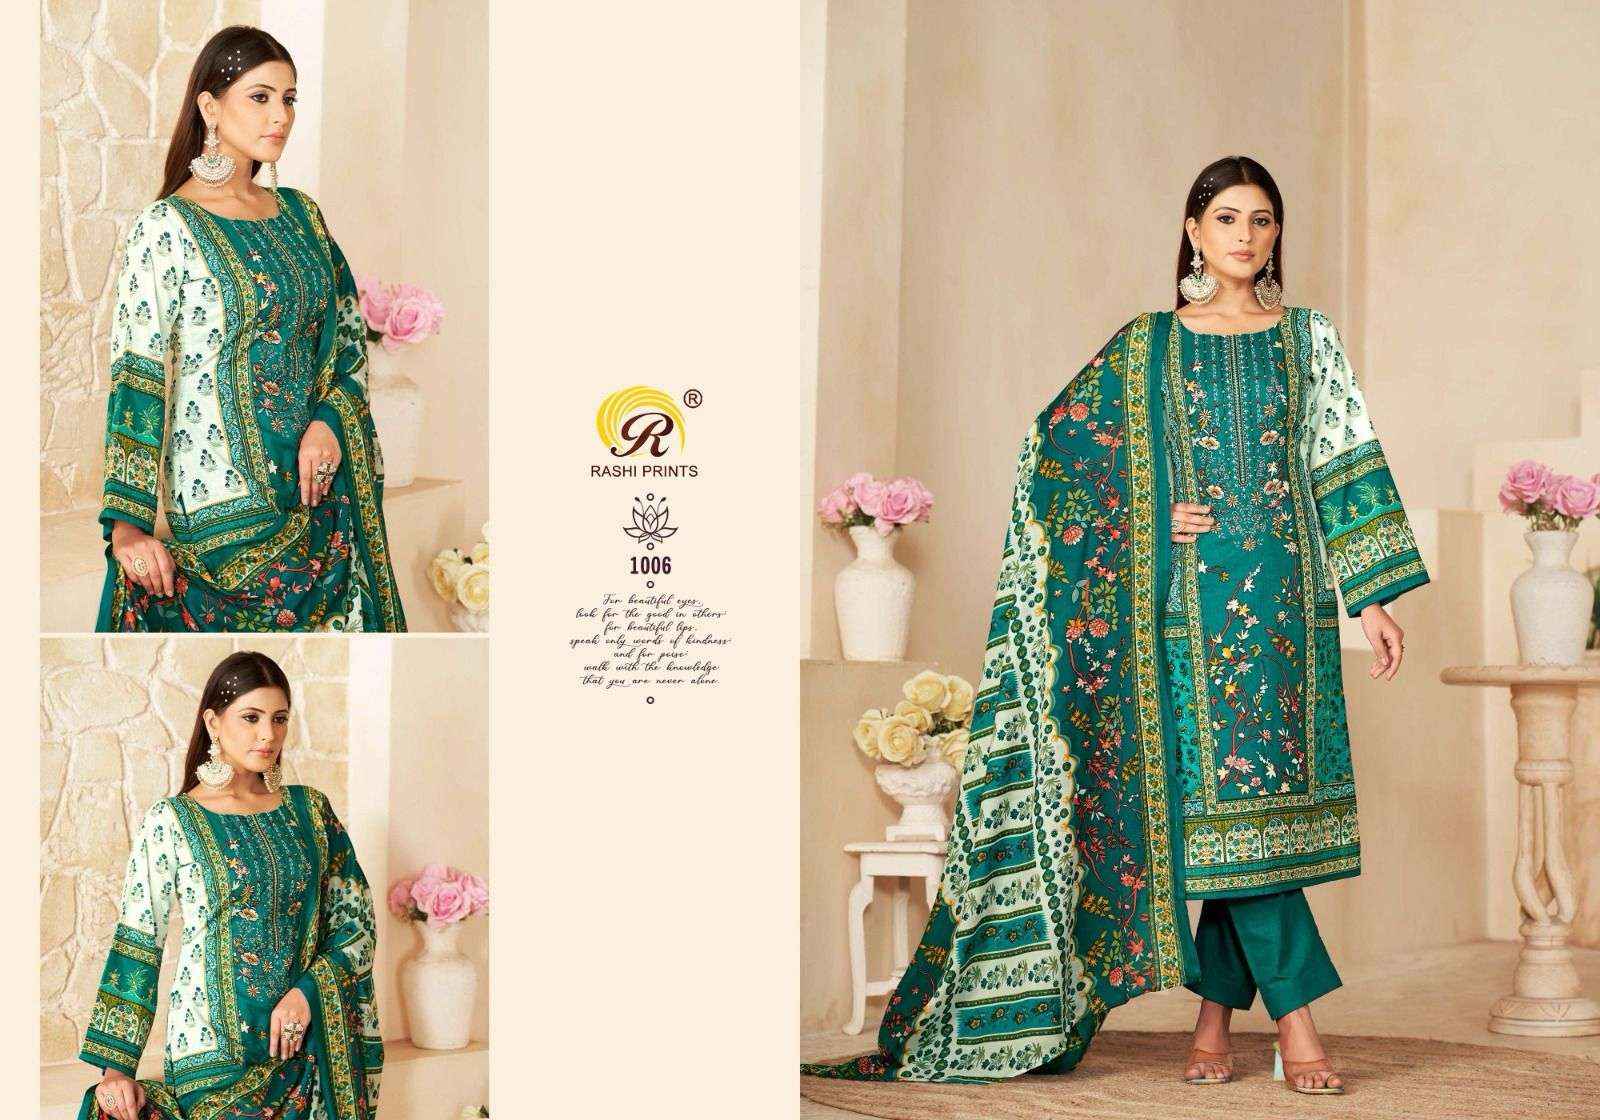 Rashi Prints Nayara Vol 32 Cambric Cotton Dress Material 8 pcs Catalogue